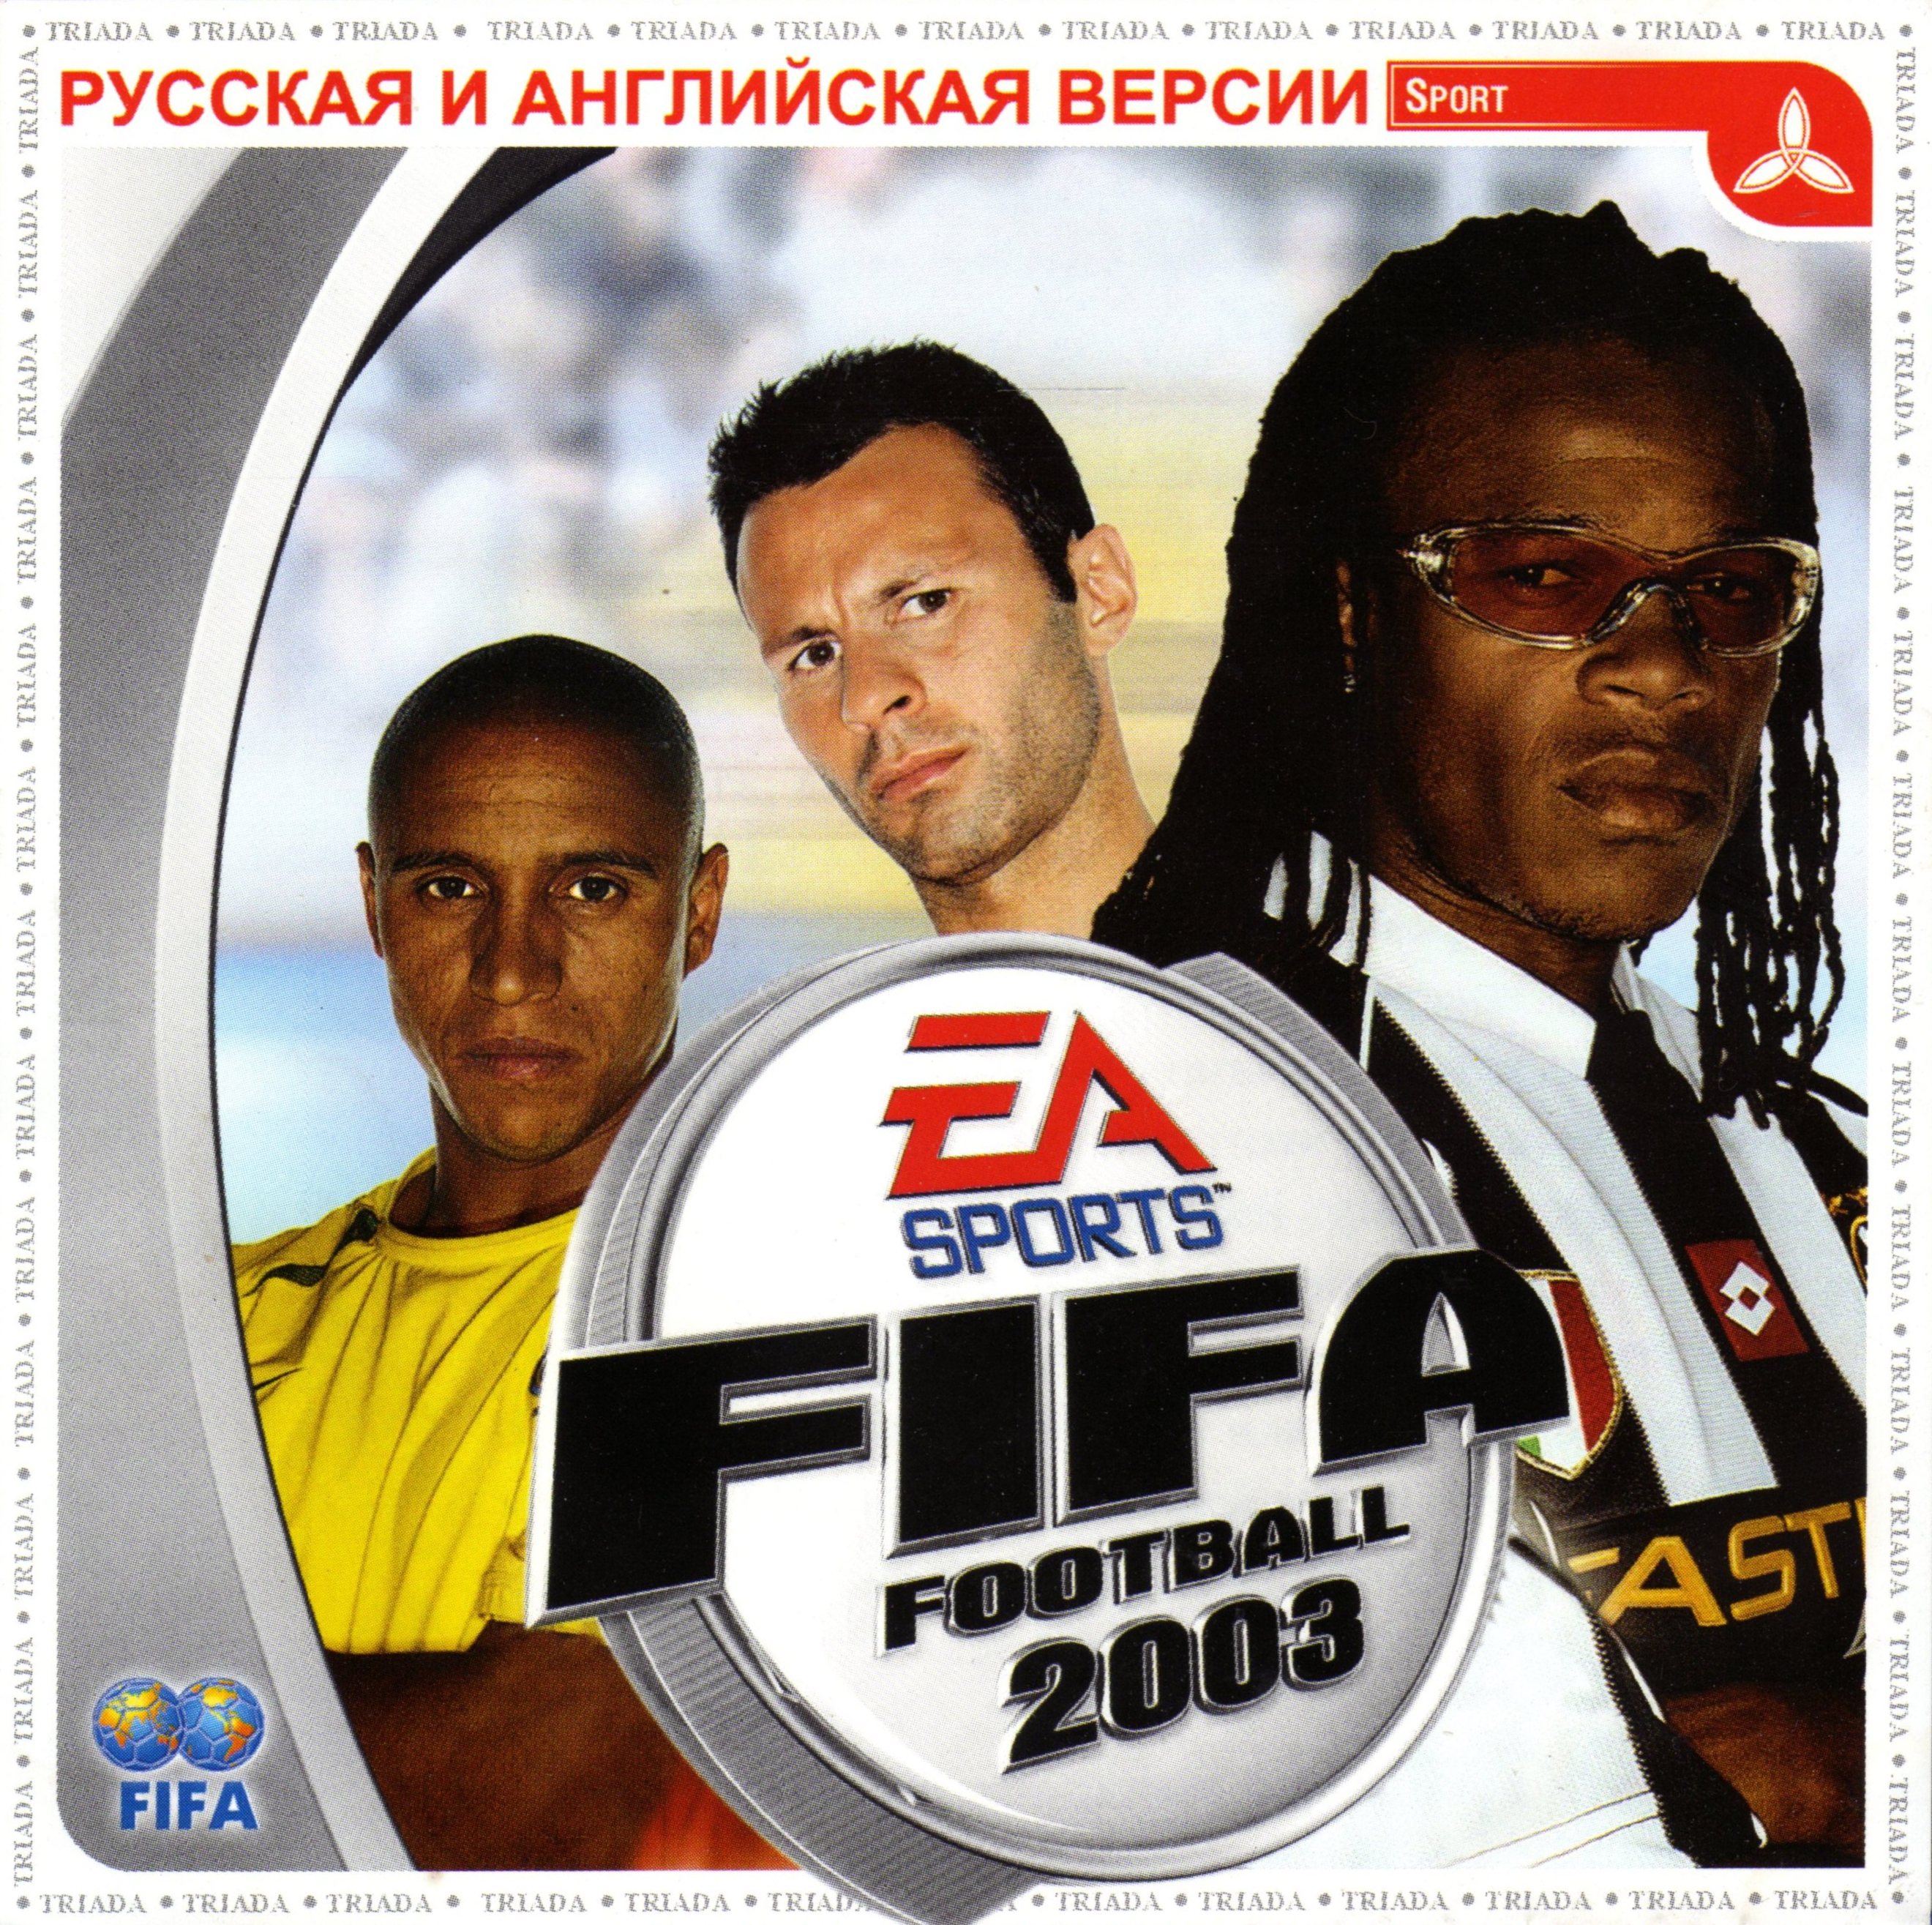 Fifa ps1. FIFA 2003 обложка. FIFA 2003 диск. FIFA 2003 ps1 обложка. FIFA Football 2003 ps1.